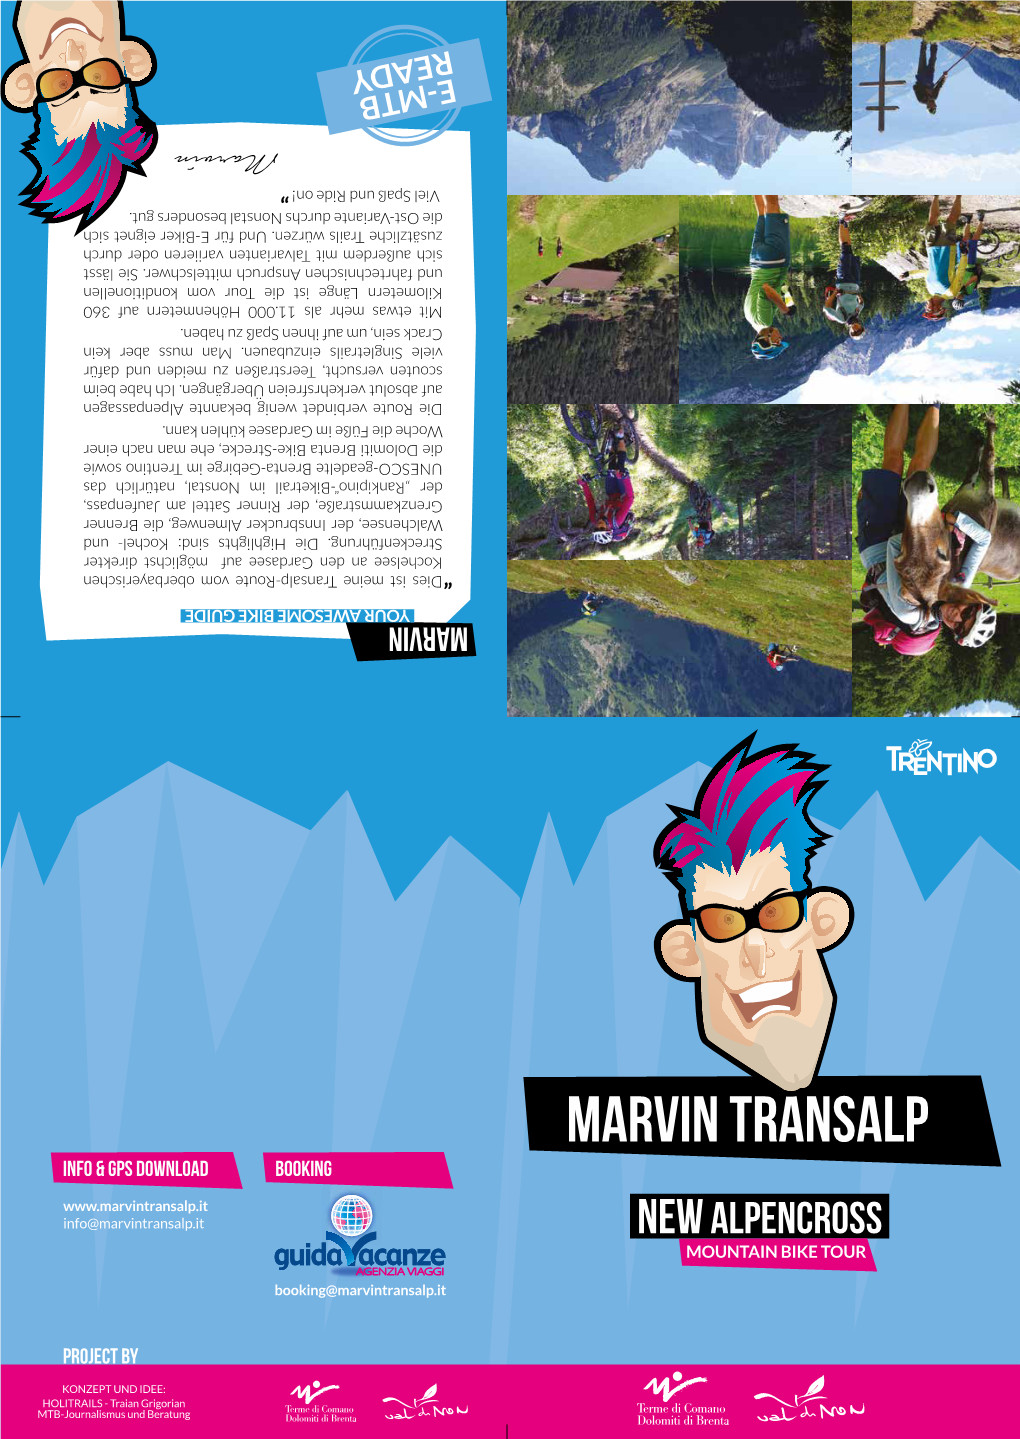 Download Gps & Info Booking Marvin Transalp Marvin